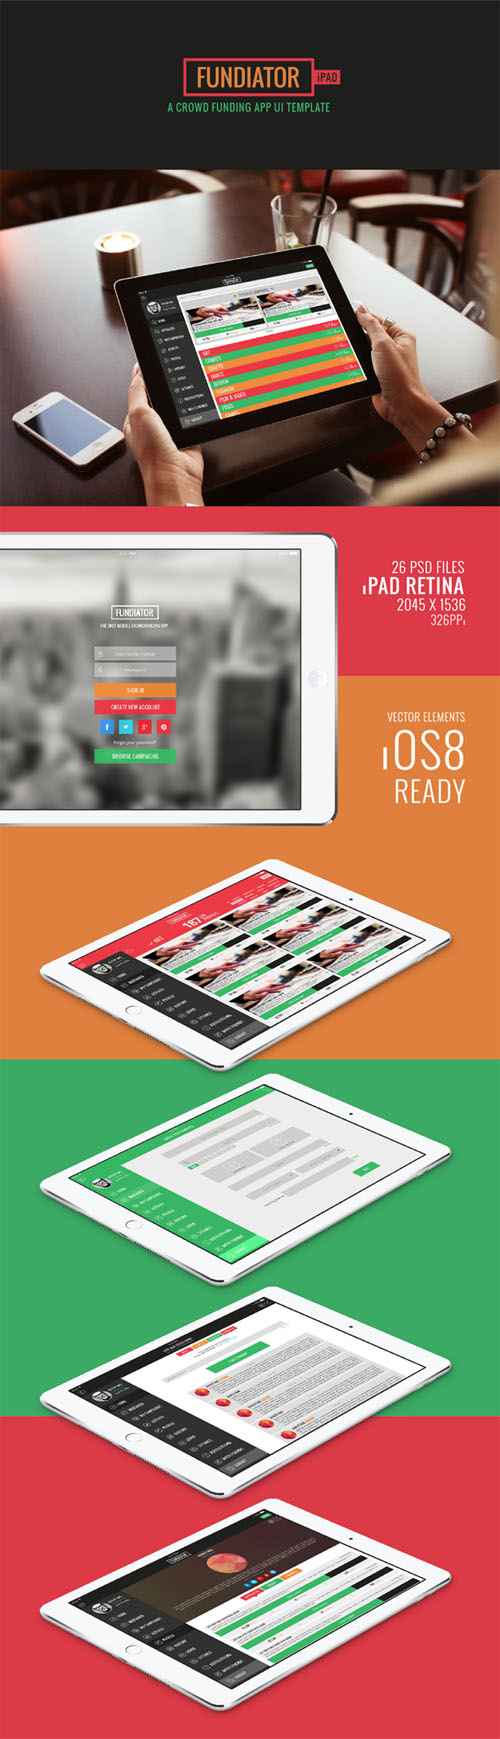 Fundiator iPad App UI Kit